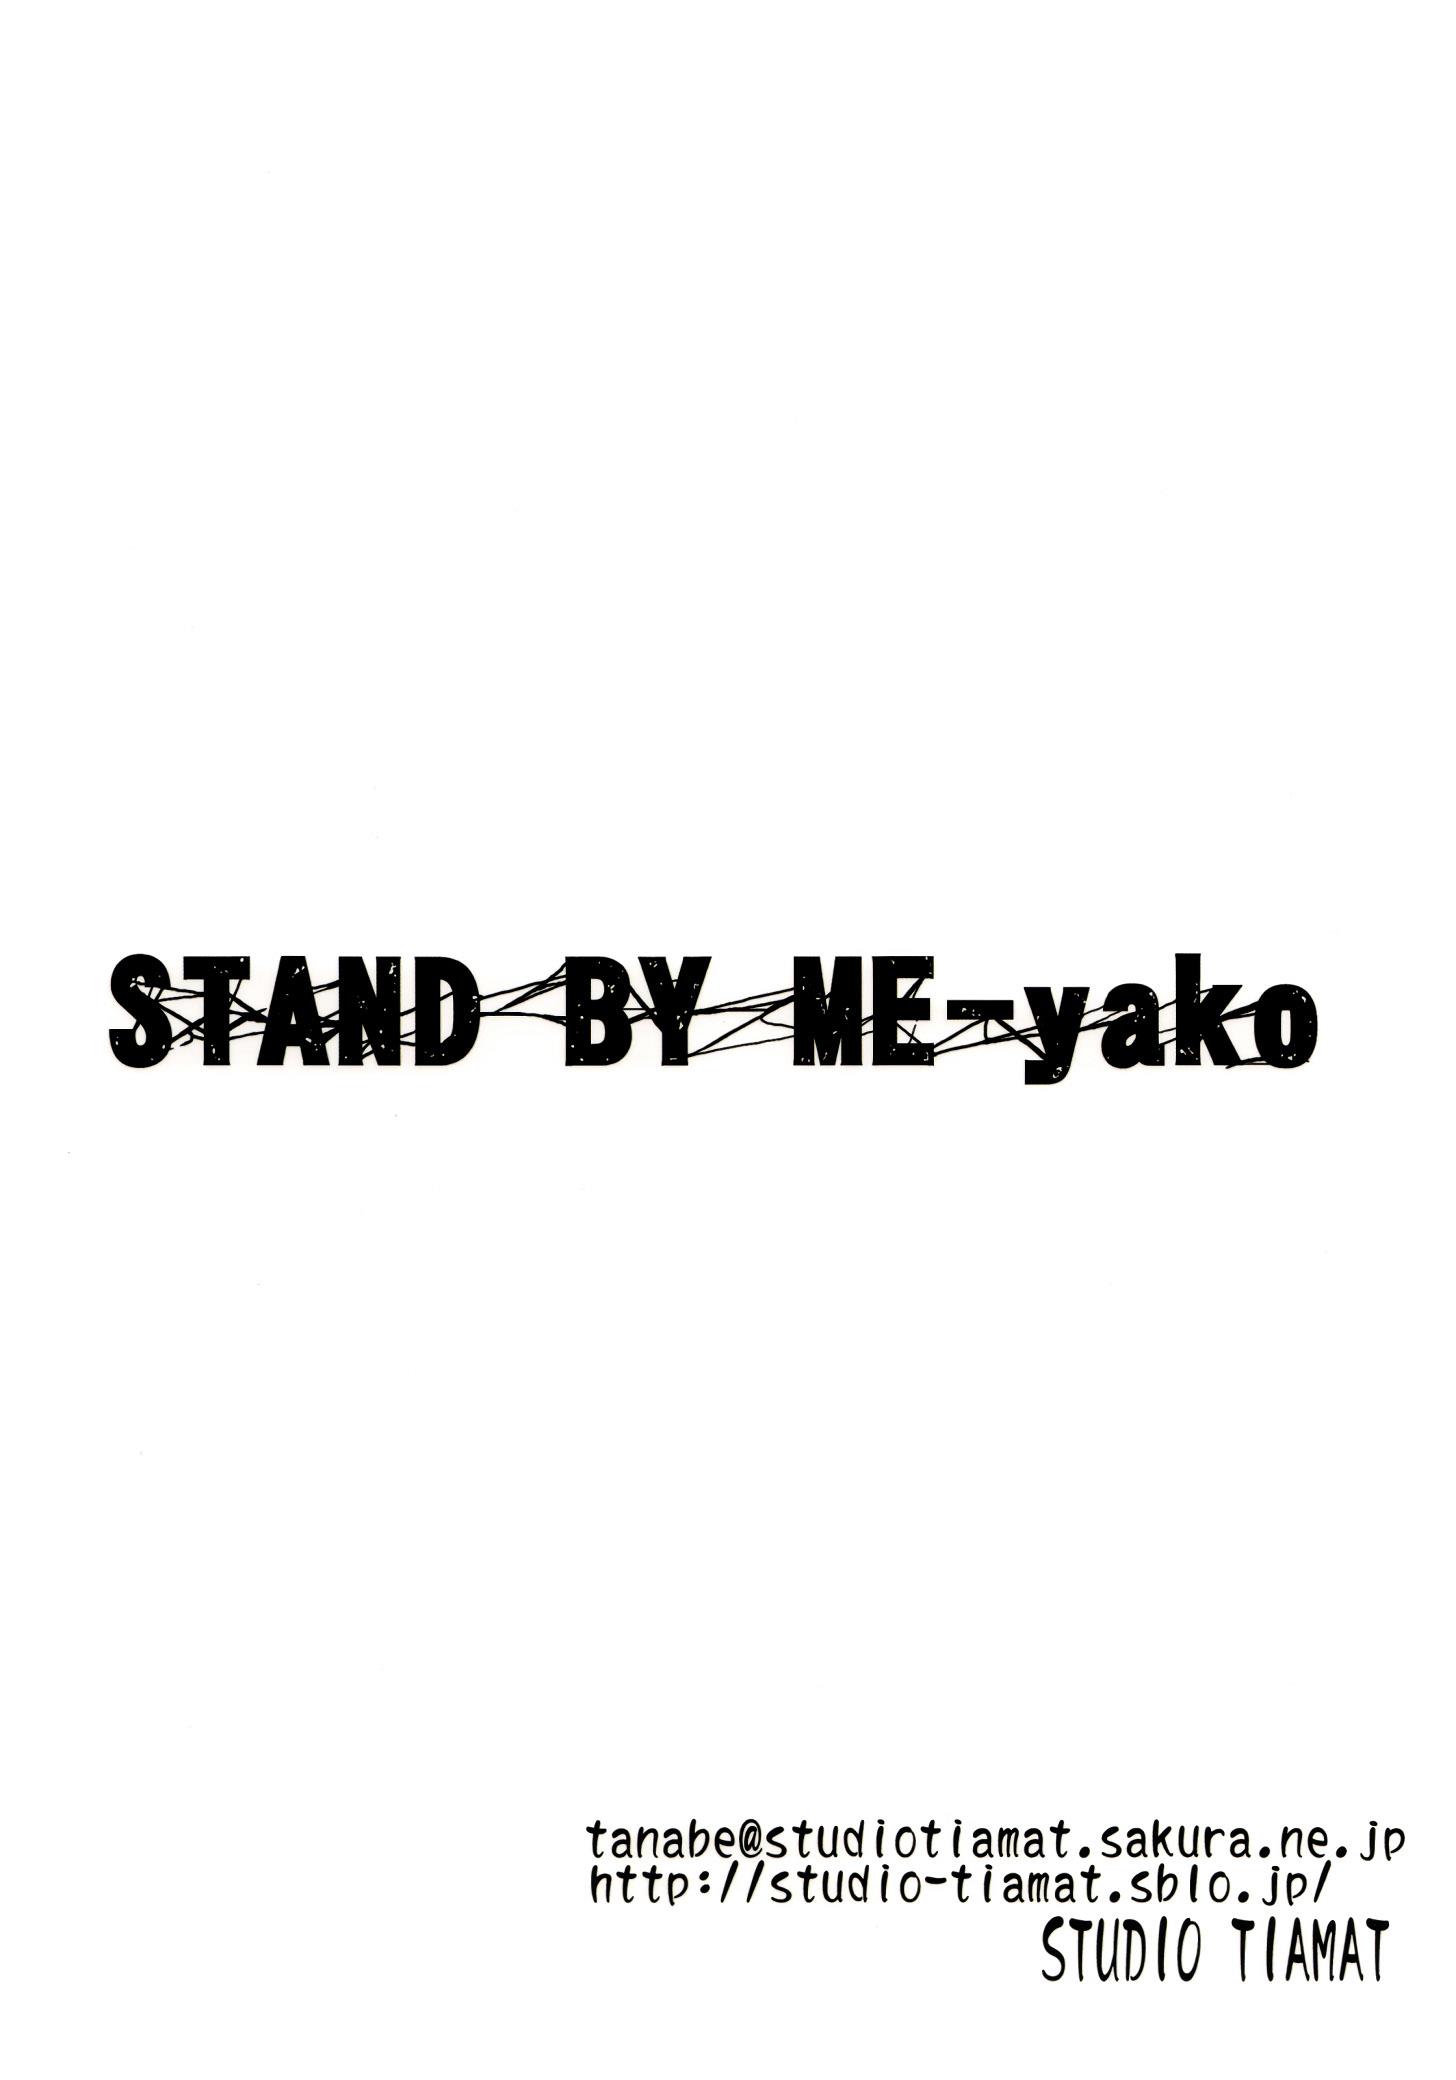 Stand By Me-yako